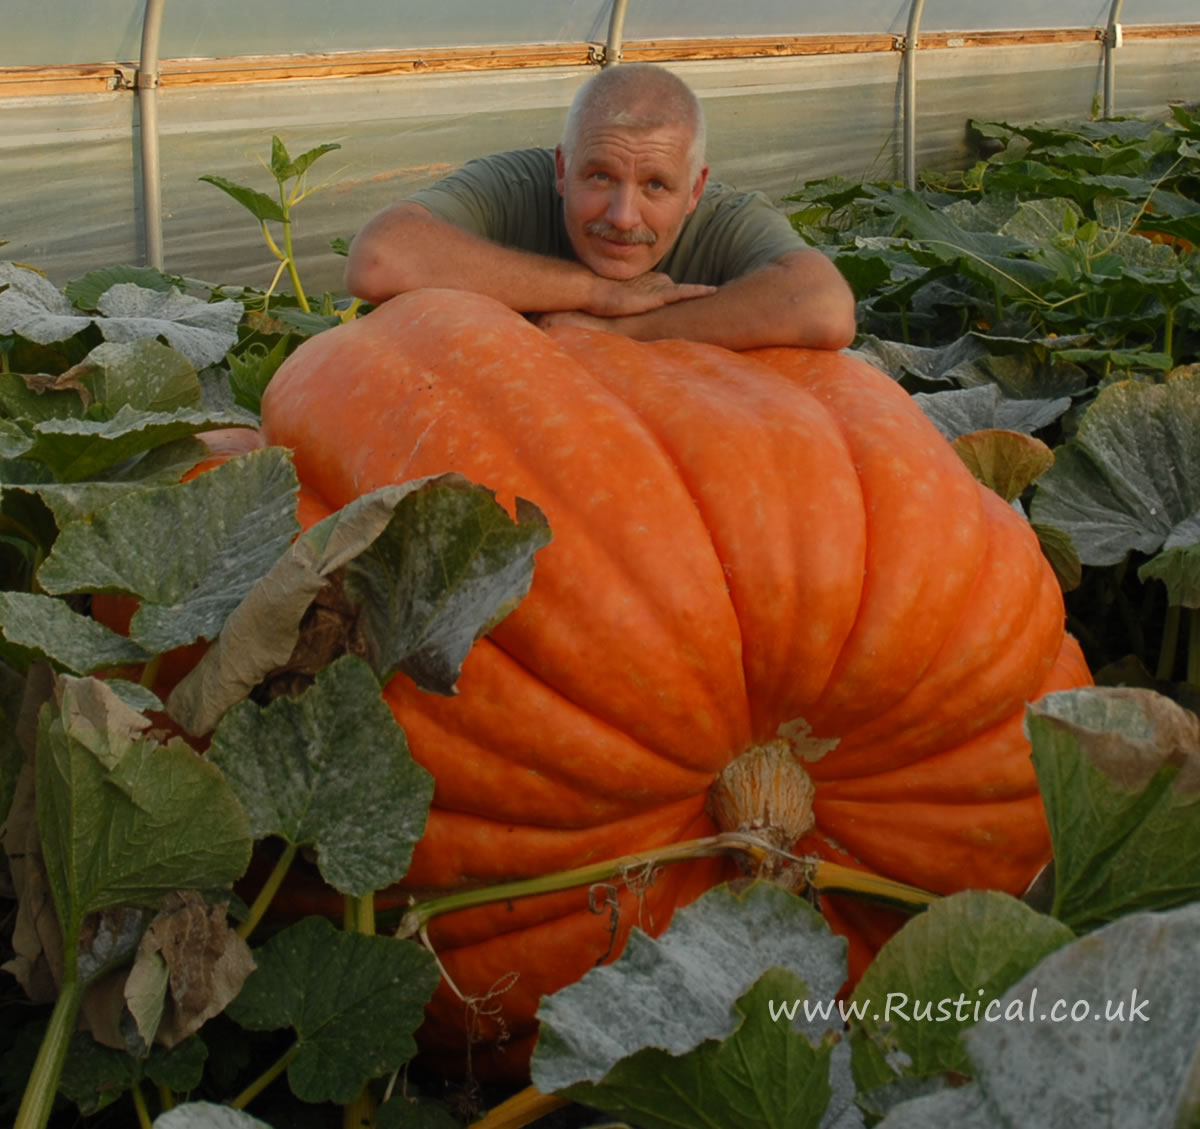 A nicely shaped orange coloured giant pumpkin